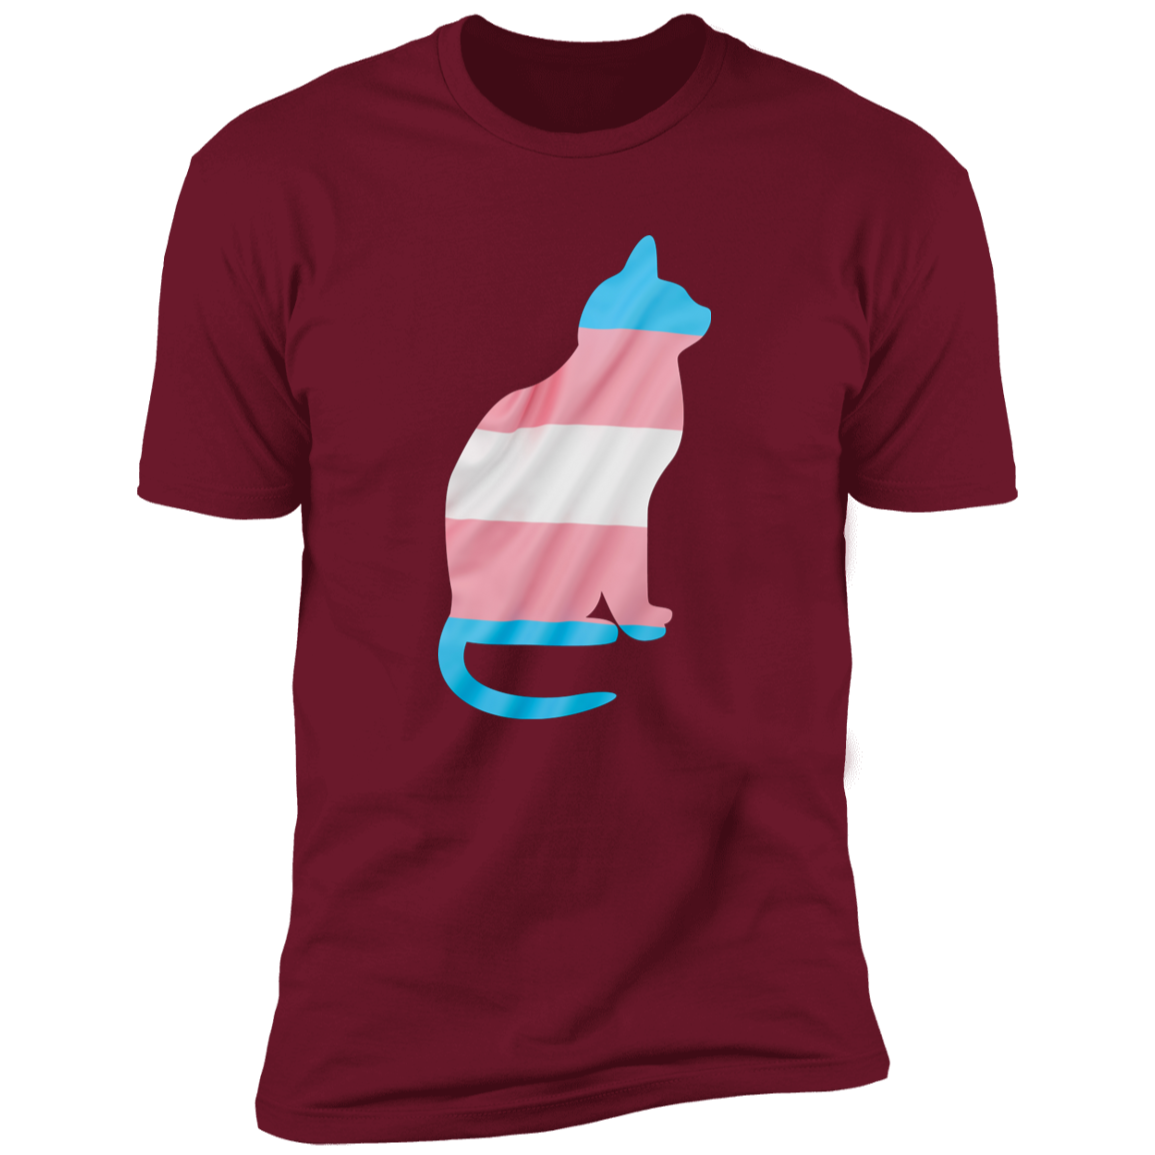 Trans Pride Cat Pride T-shirt, Trans Pride Cat Shirt for humans, in cardinal red